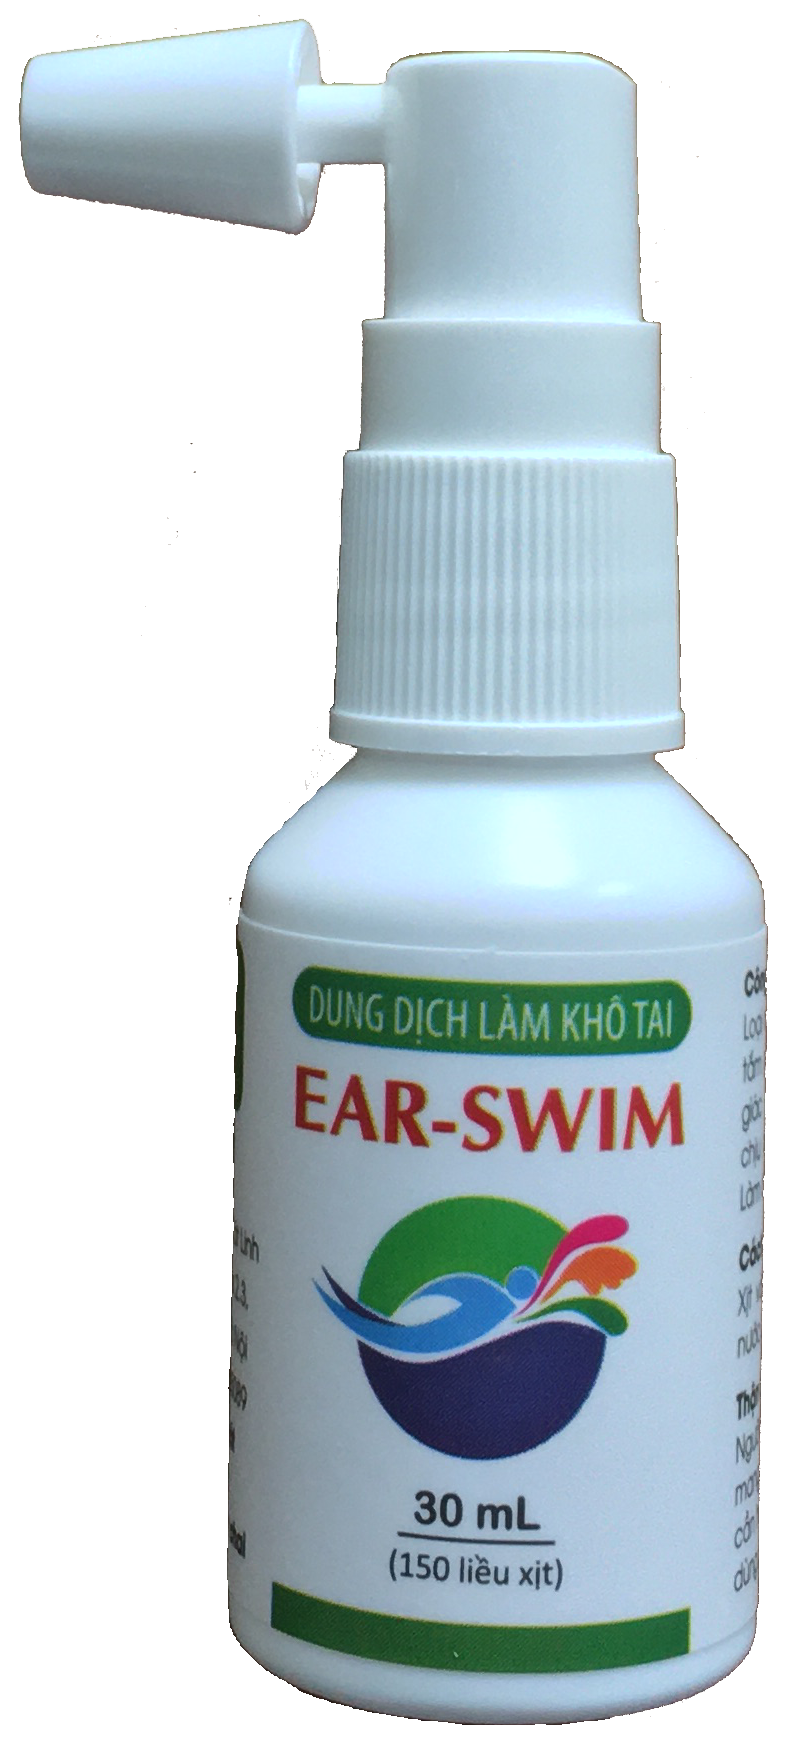 Ear-Swim (Dung dịch làm khô tai)